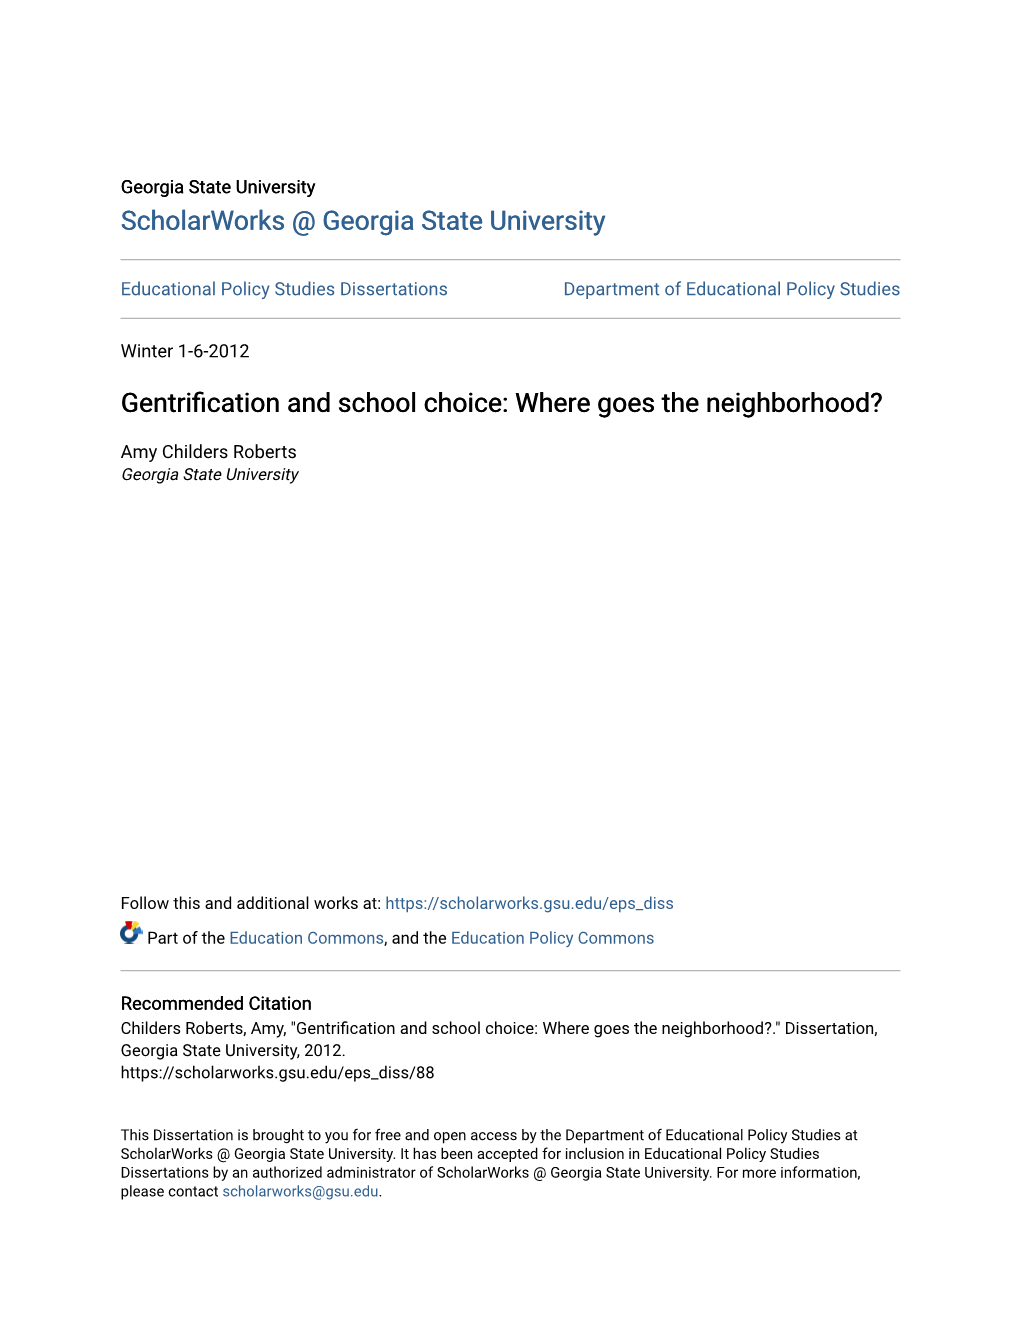 Gentrification and School Choice: Where Goes the Neighborhood?